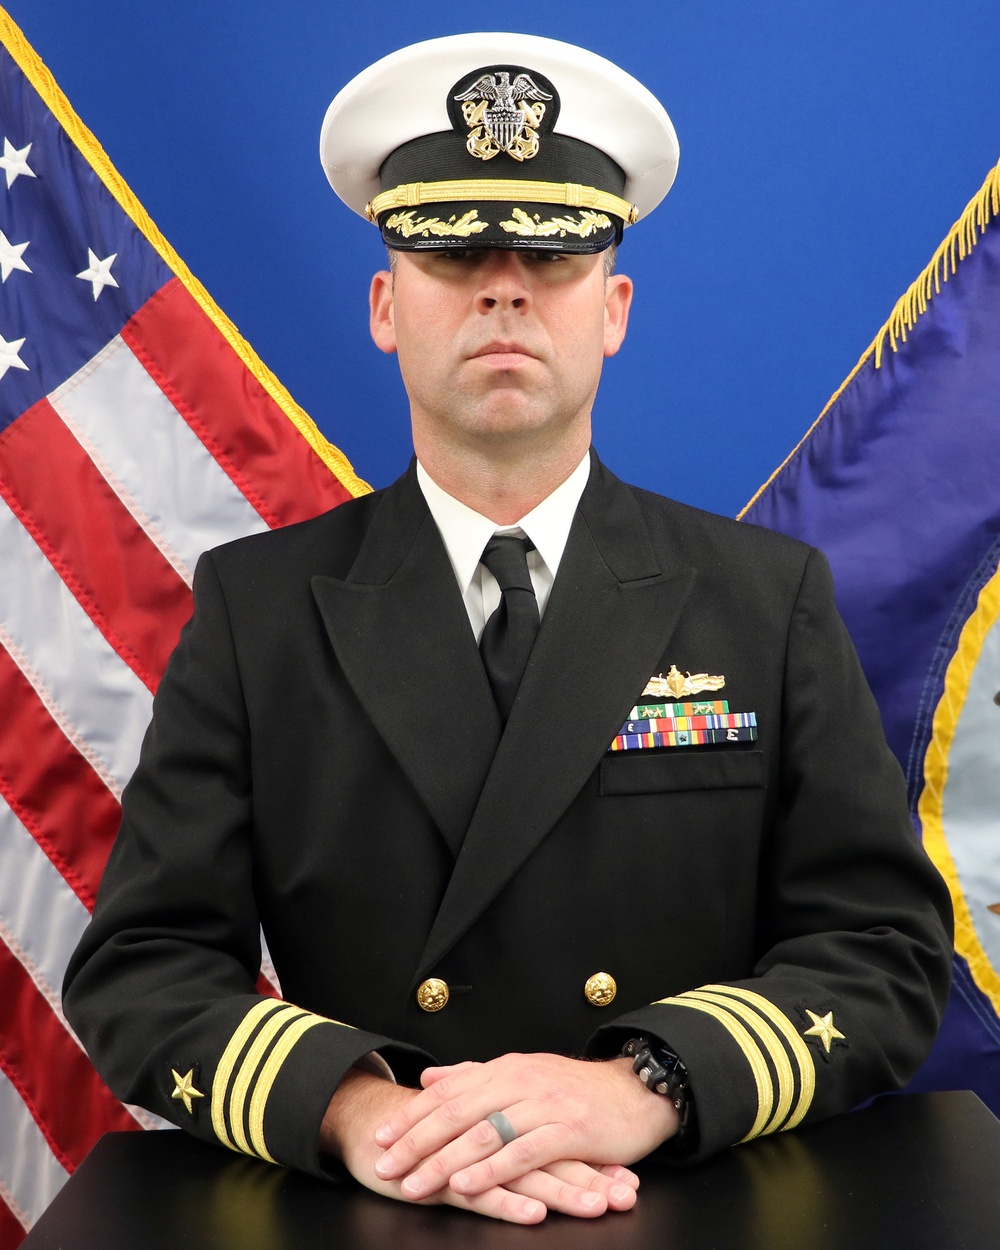 Commander Phil Richter